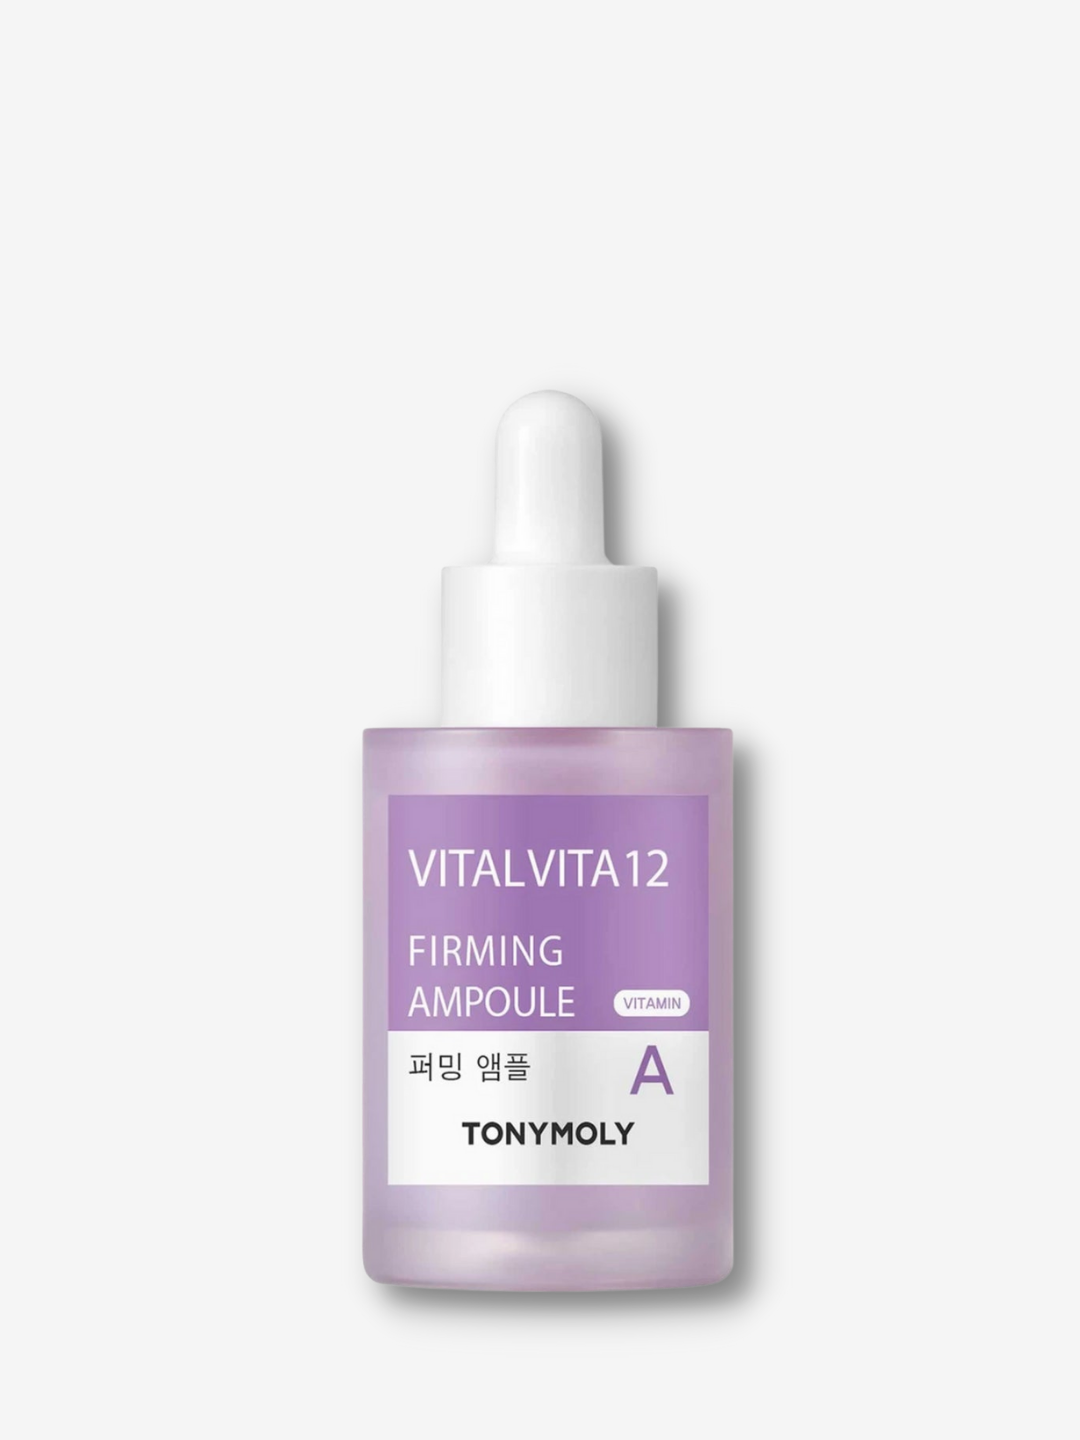 Tonymoly - Vital Vita 12 Firming Ampoule - 30 ml